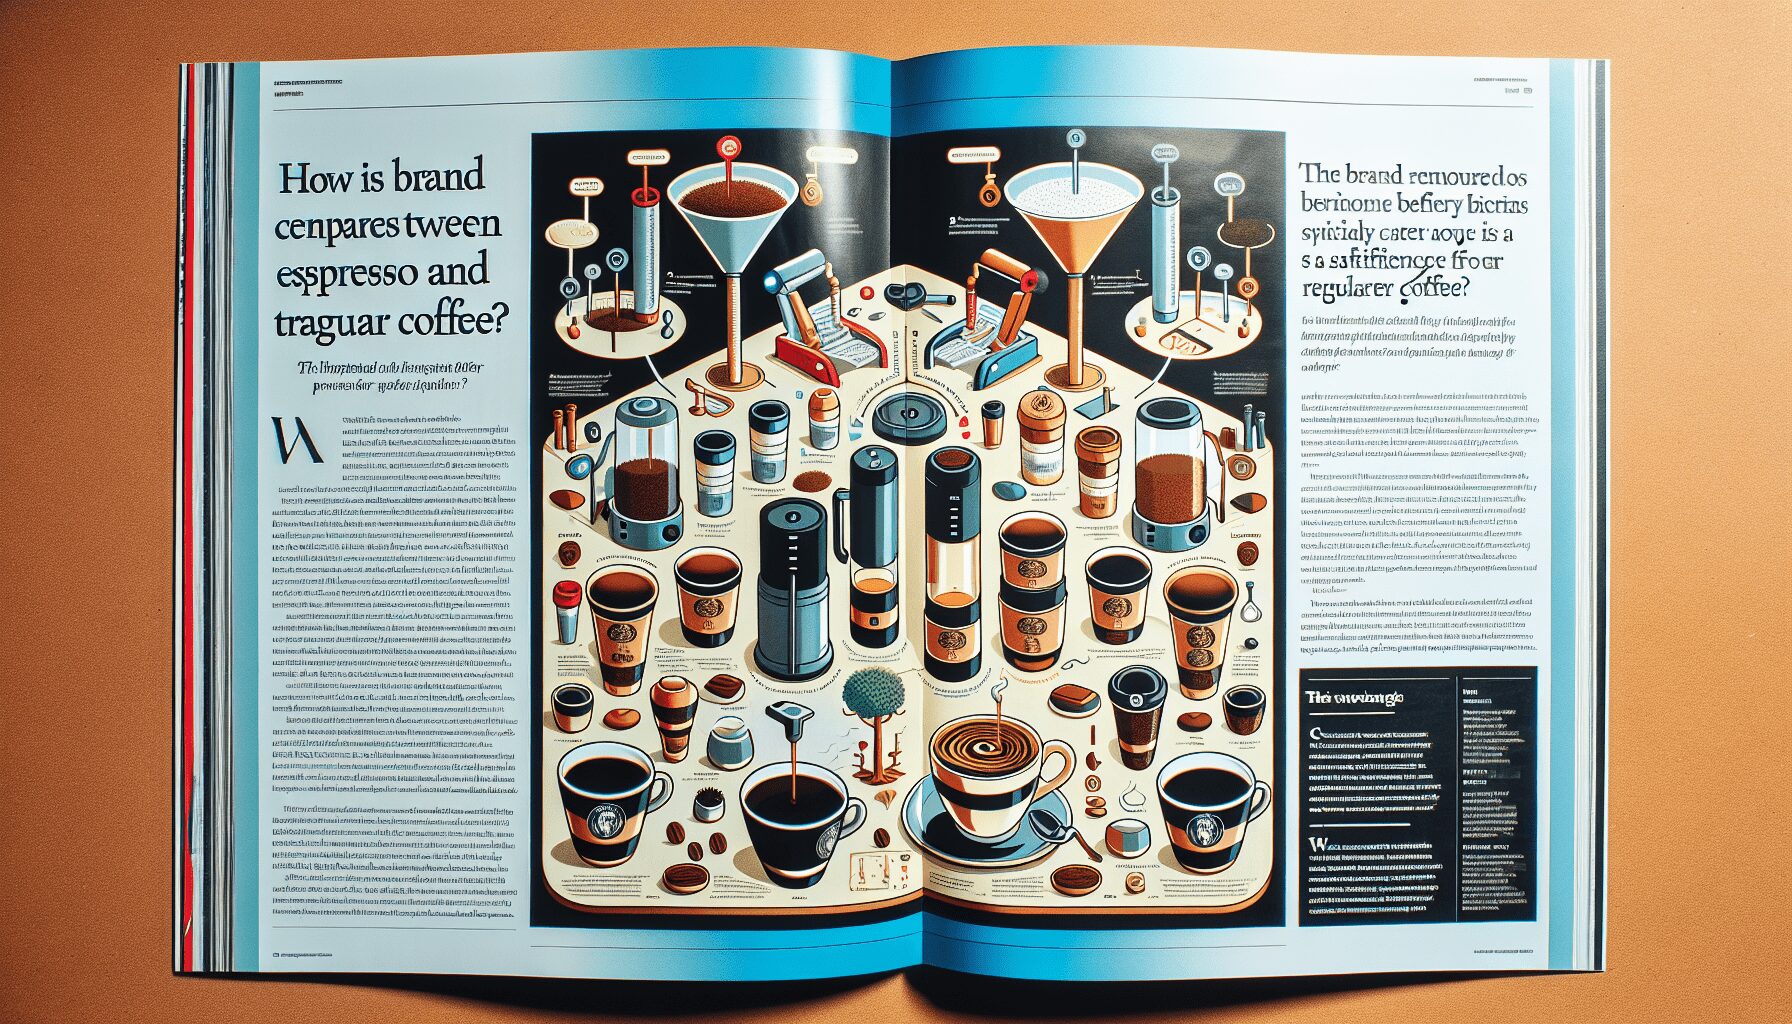 Can Nespresso Make Regular Coffee?